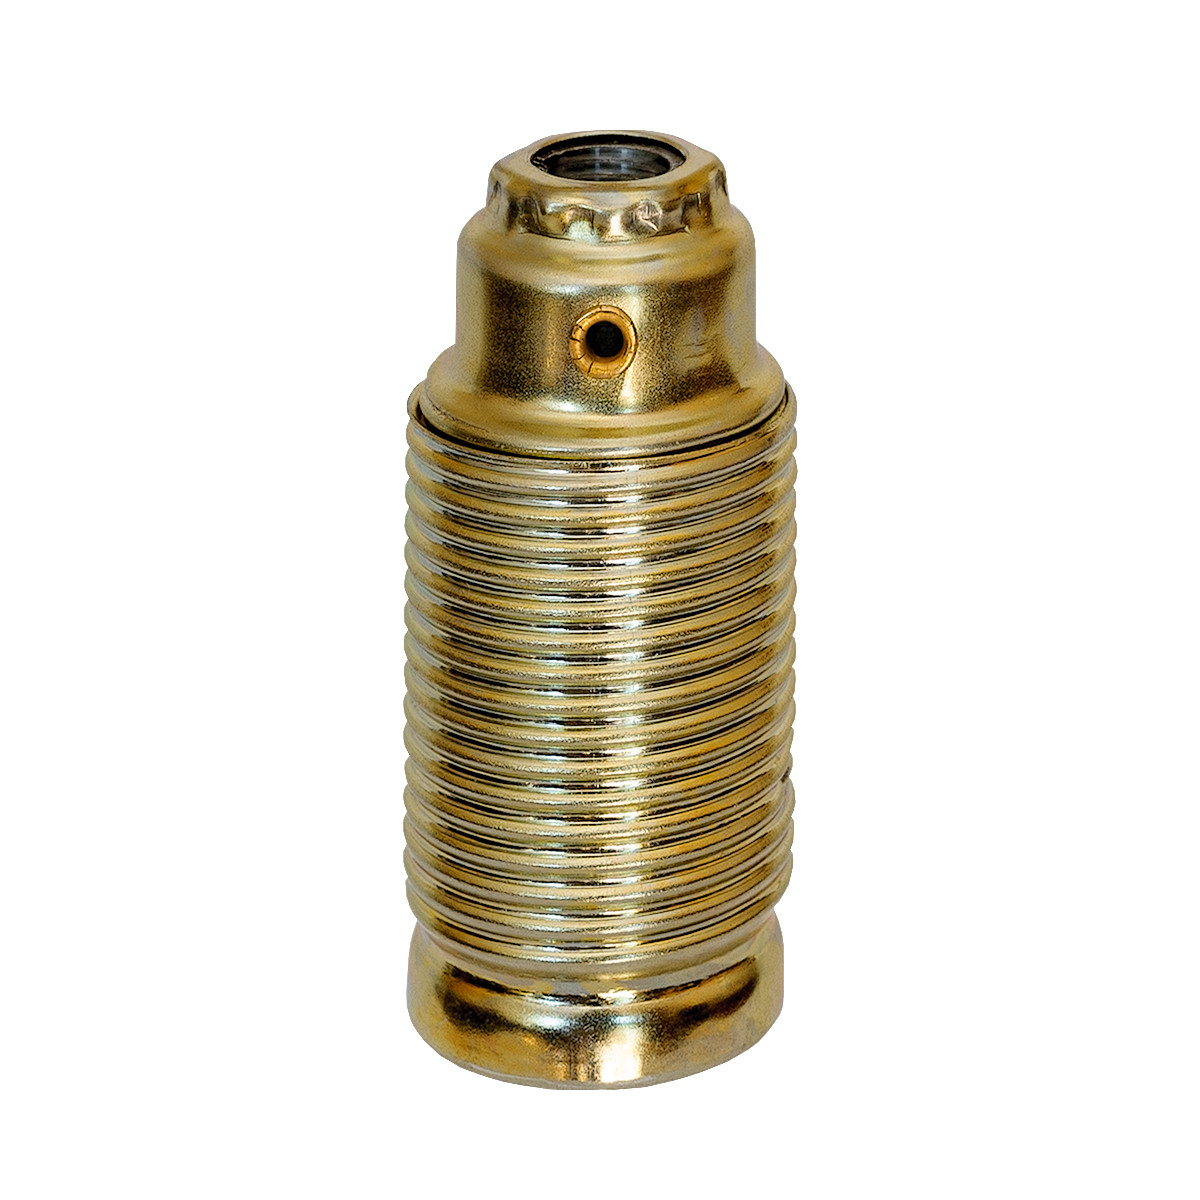 Metal Lamp Holder E14 Cylinder Shape With External Thread Gold